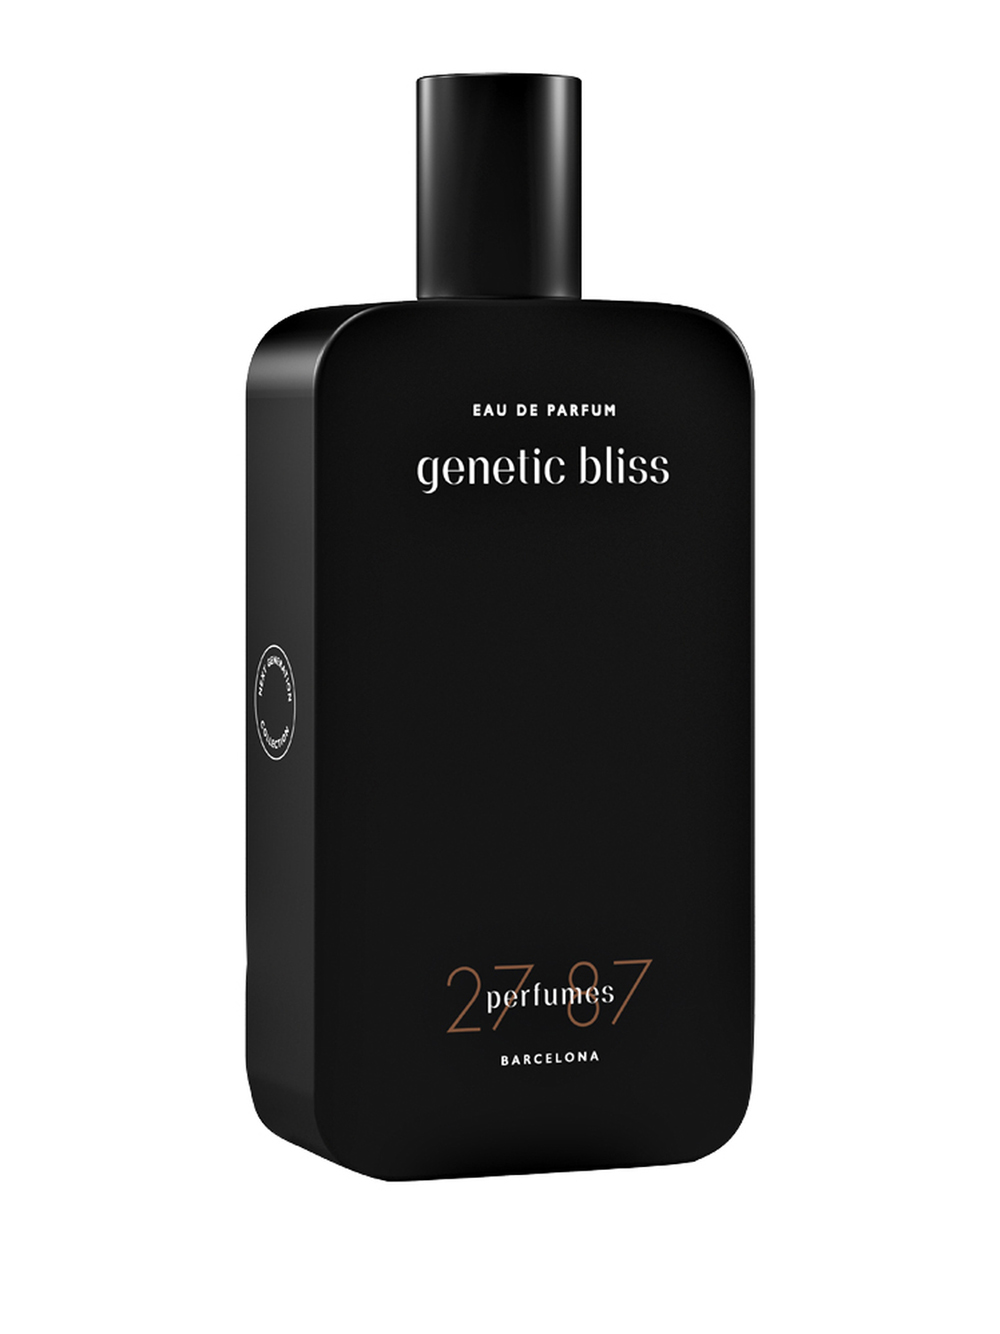 genetic bliss Eau de Parfum 27ml